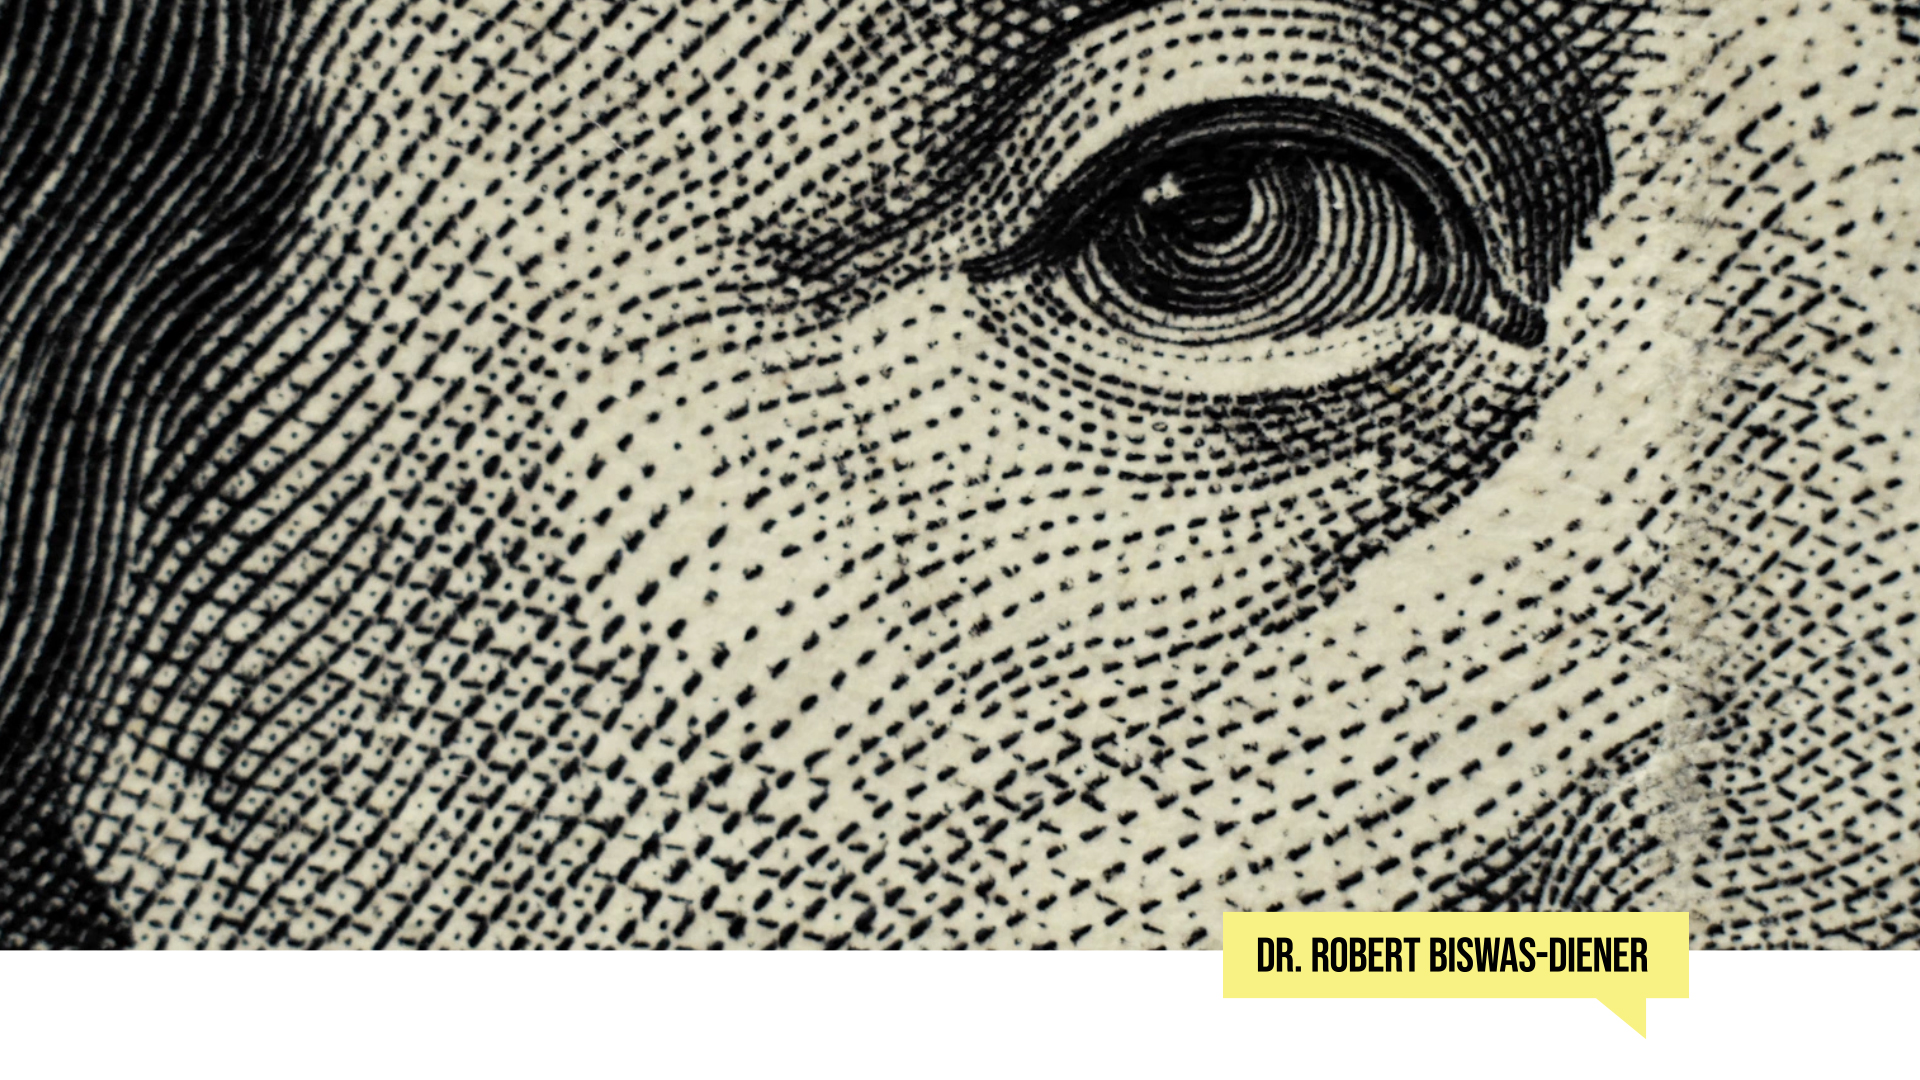 close up of Benjamin Franklin's face on the hundred dollar bill